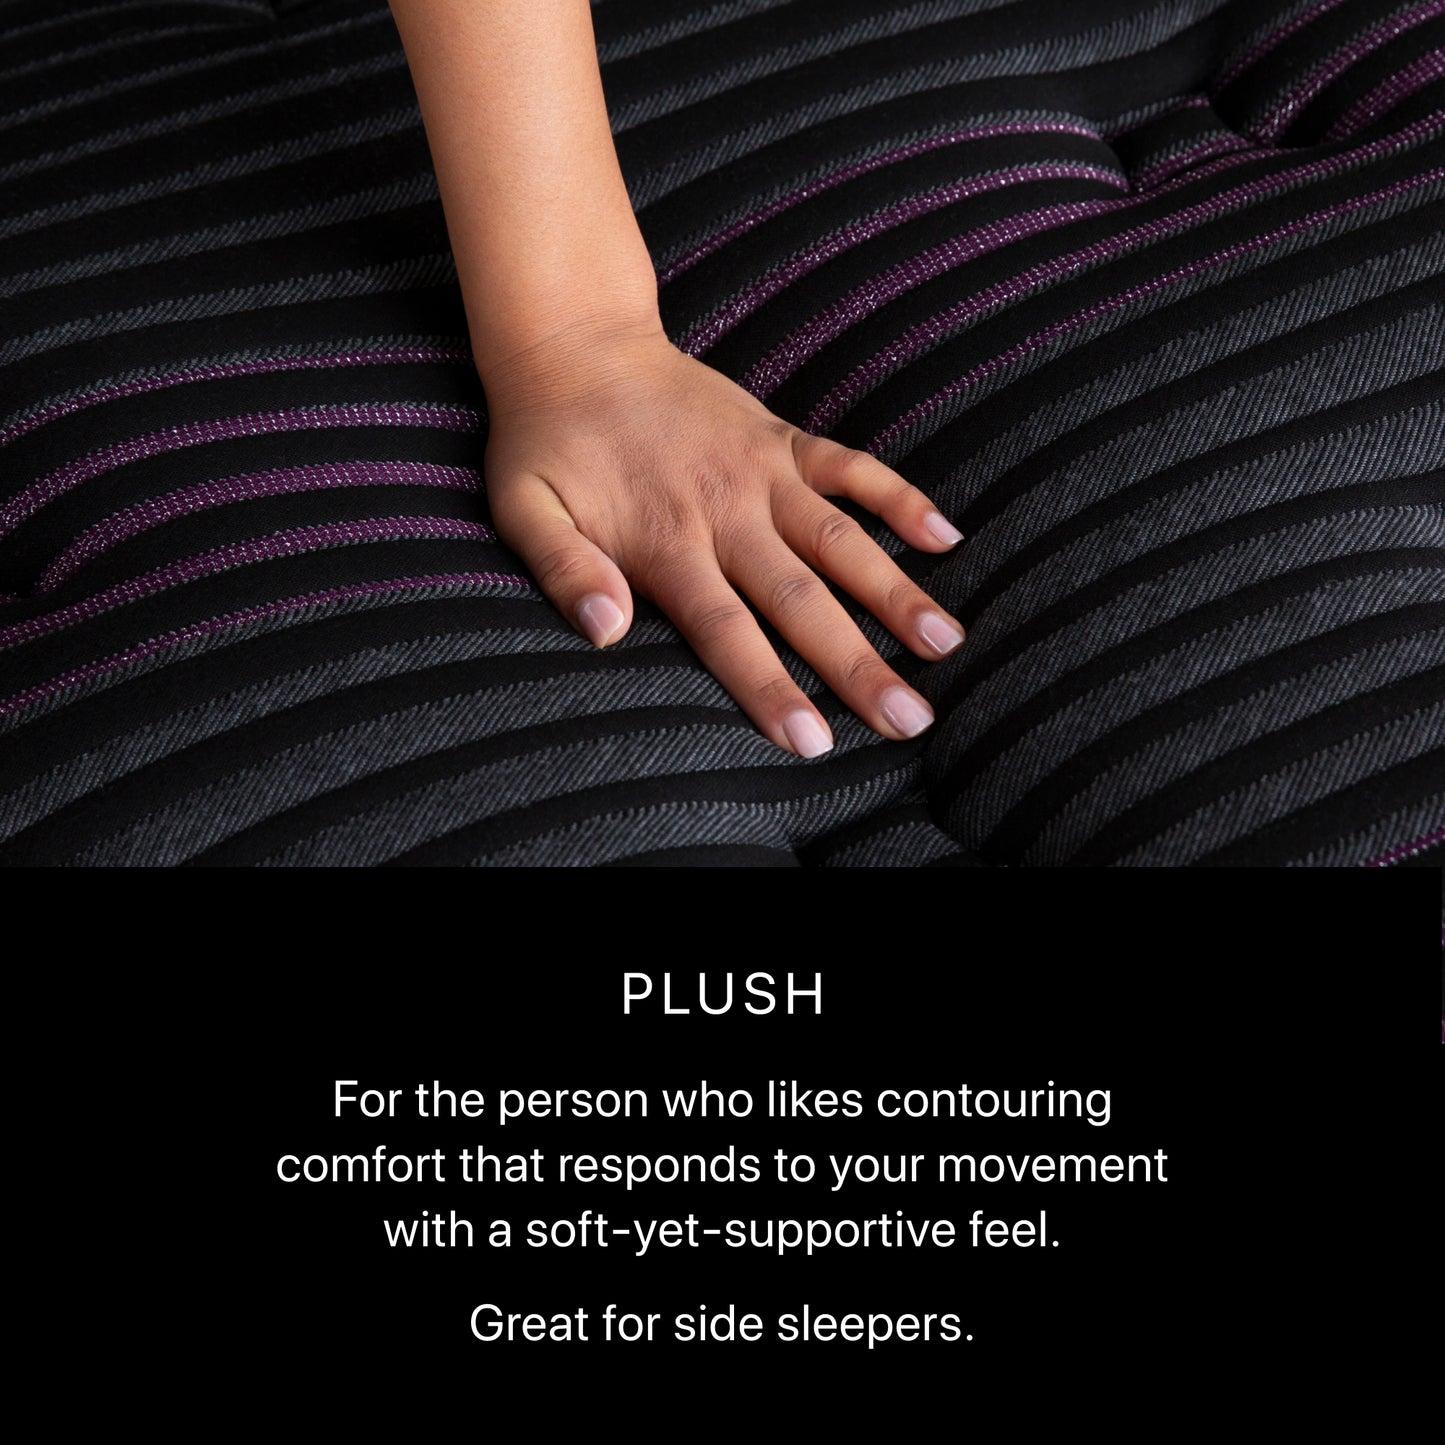 Beautyrest Black Series Two Plush Mattress - Comfort Level Image